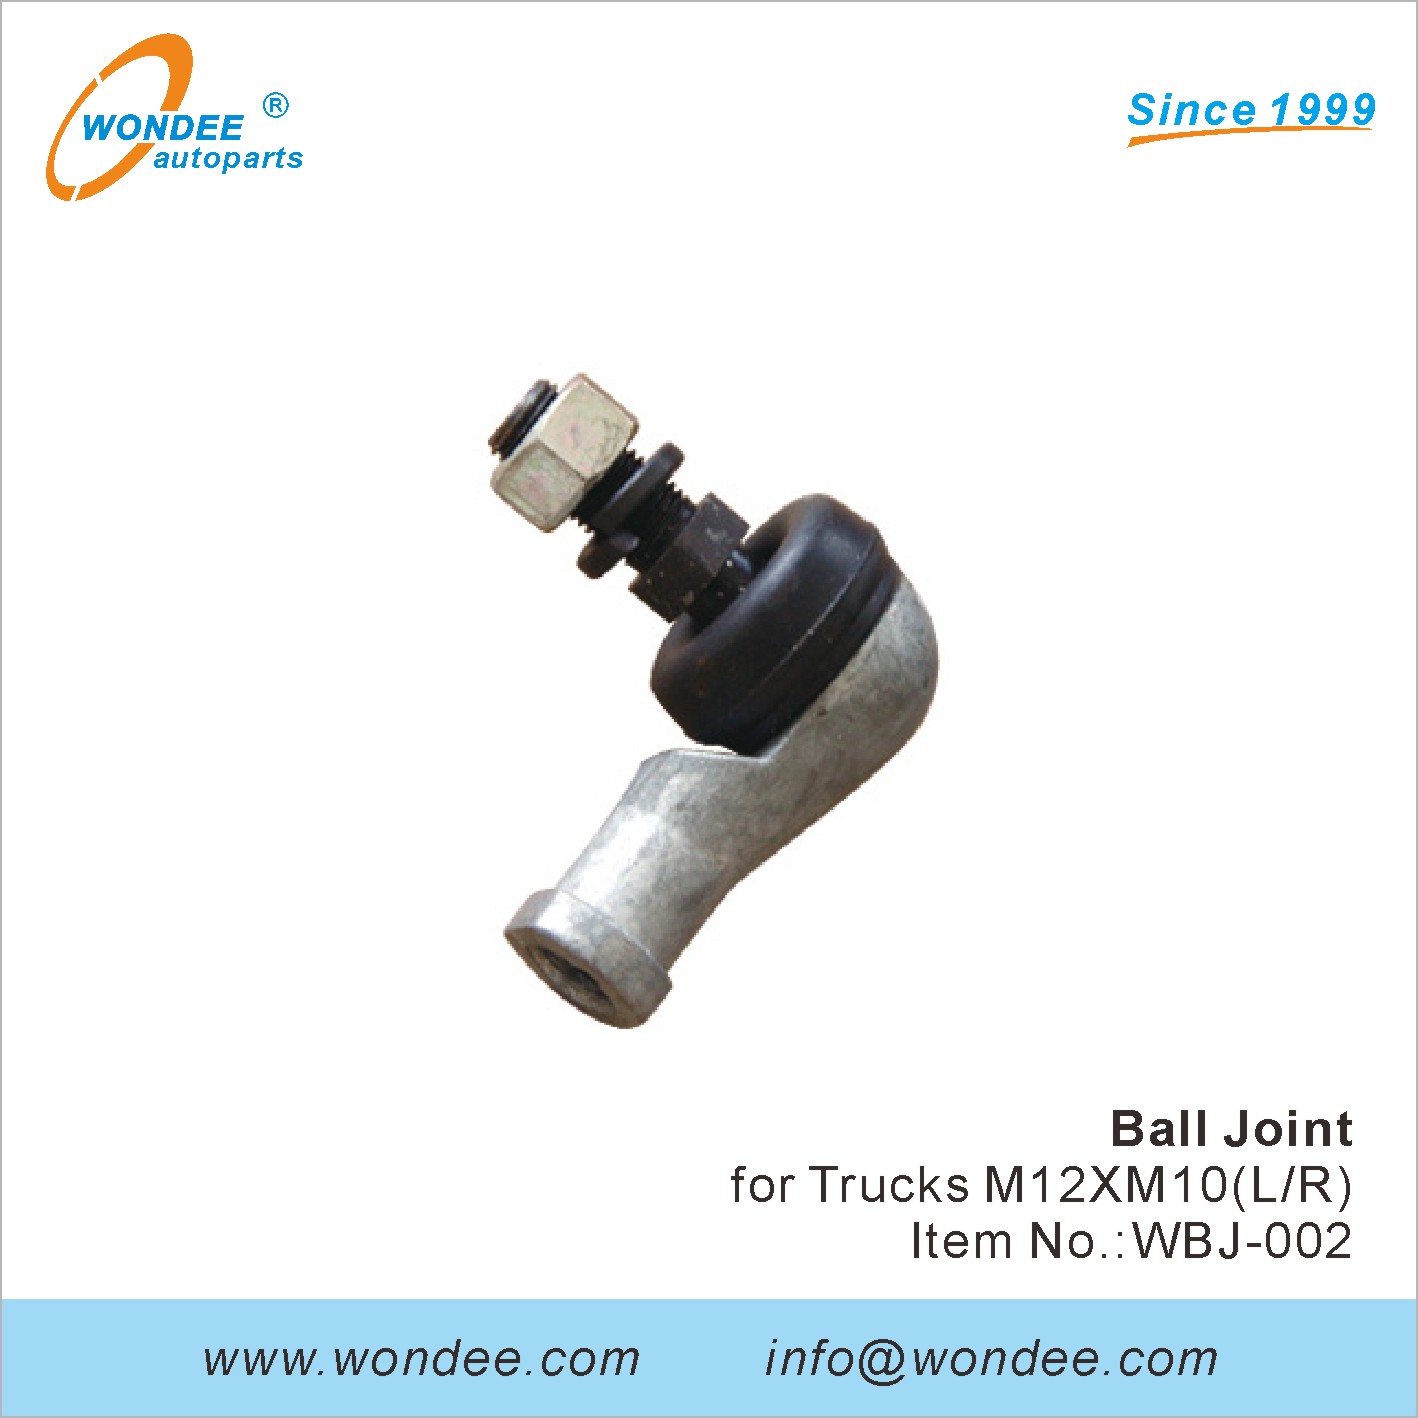 WONDEE ball joint (2)